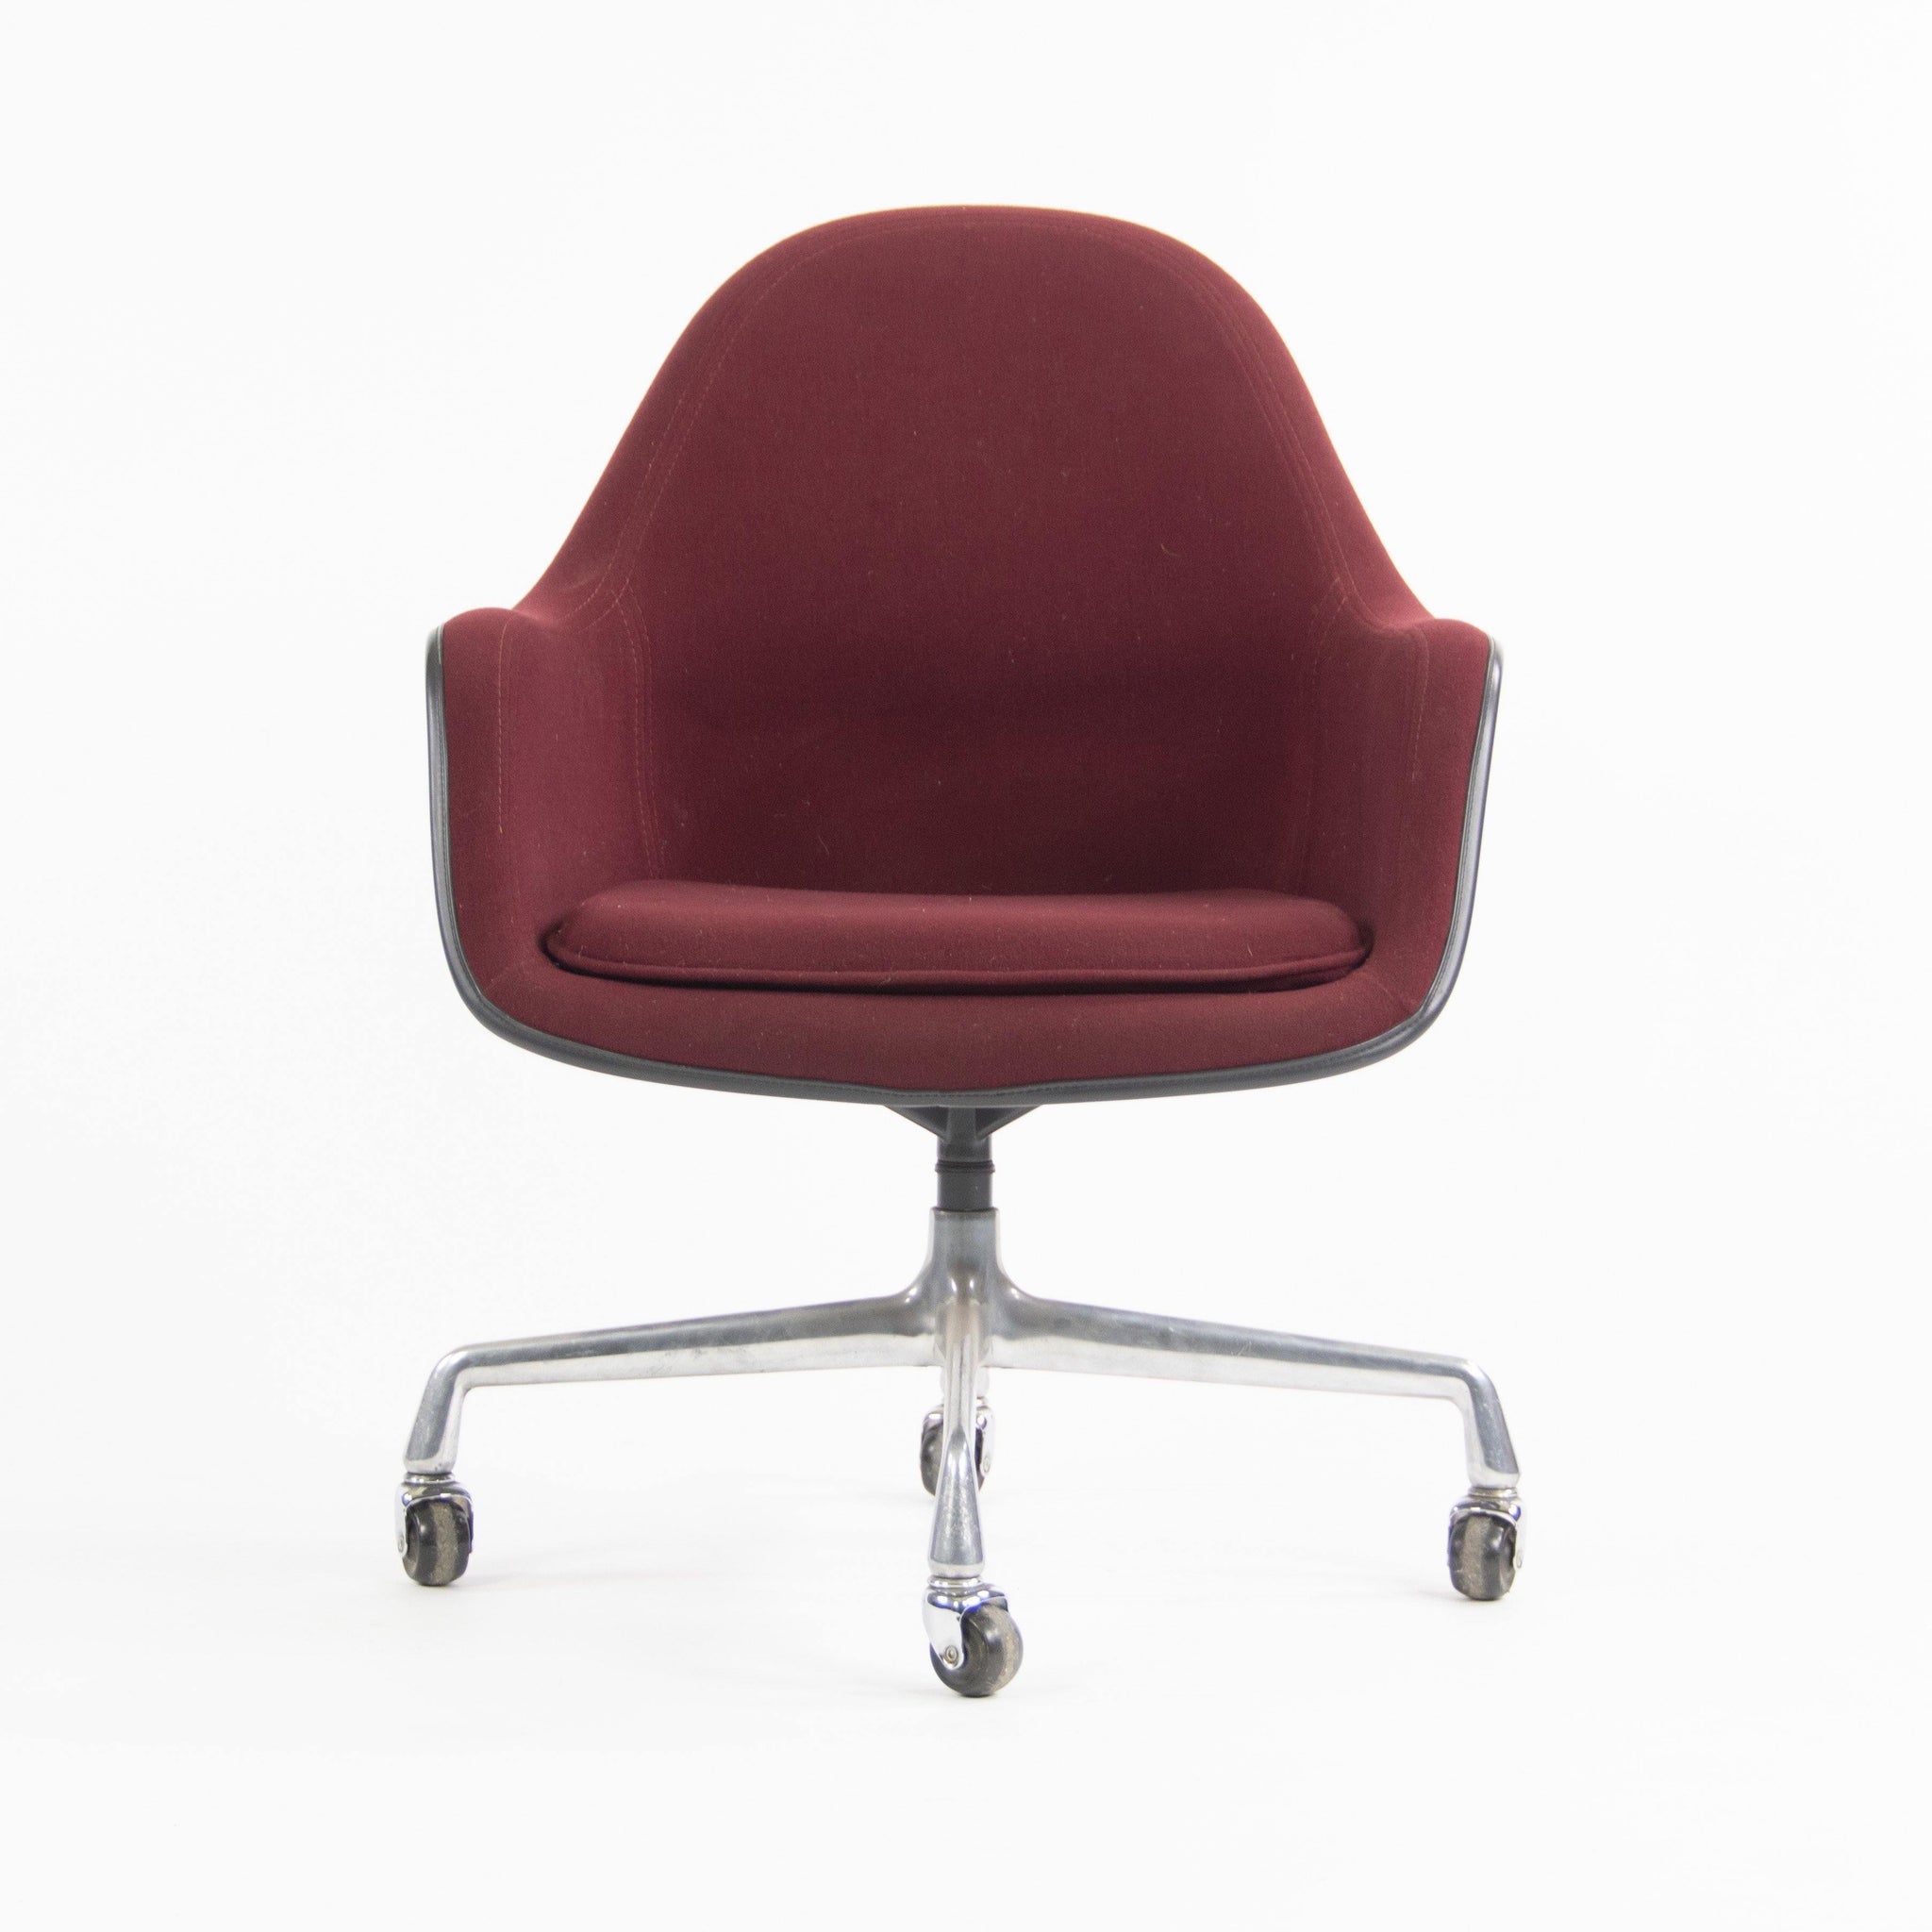 1985 Eames Herman Miller EC175 Upholstered Fiberglass Shell Chair Museum Quality - Rarify Inc.